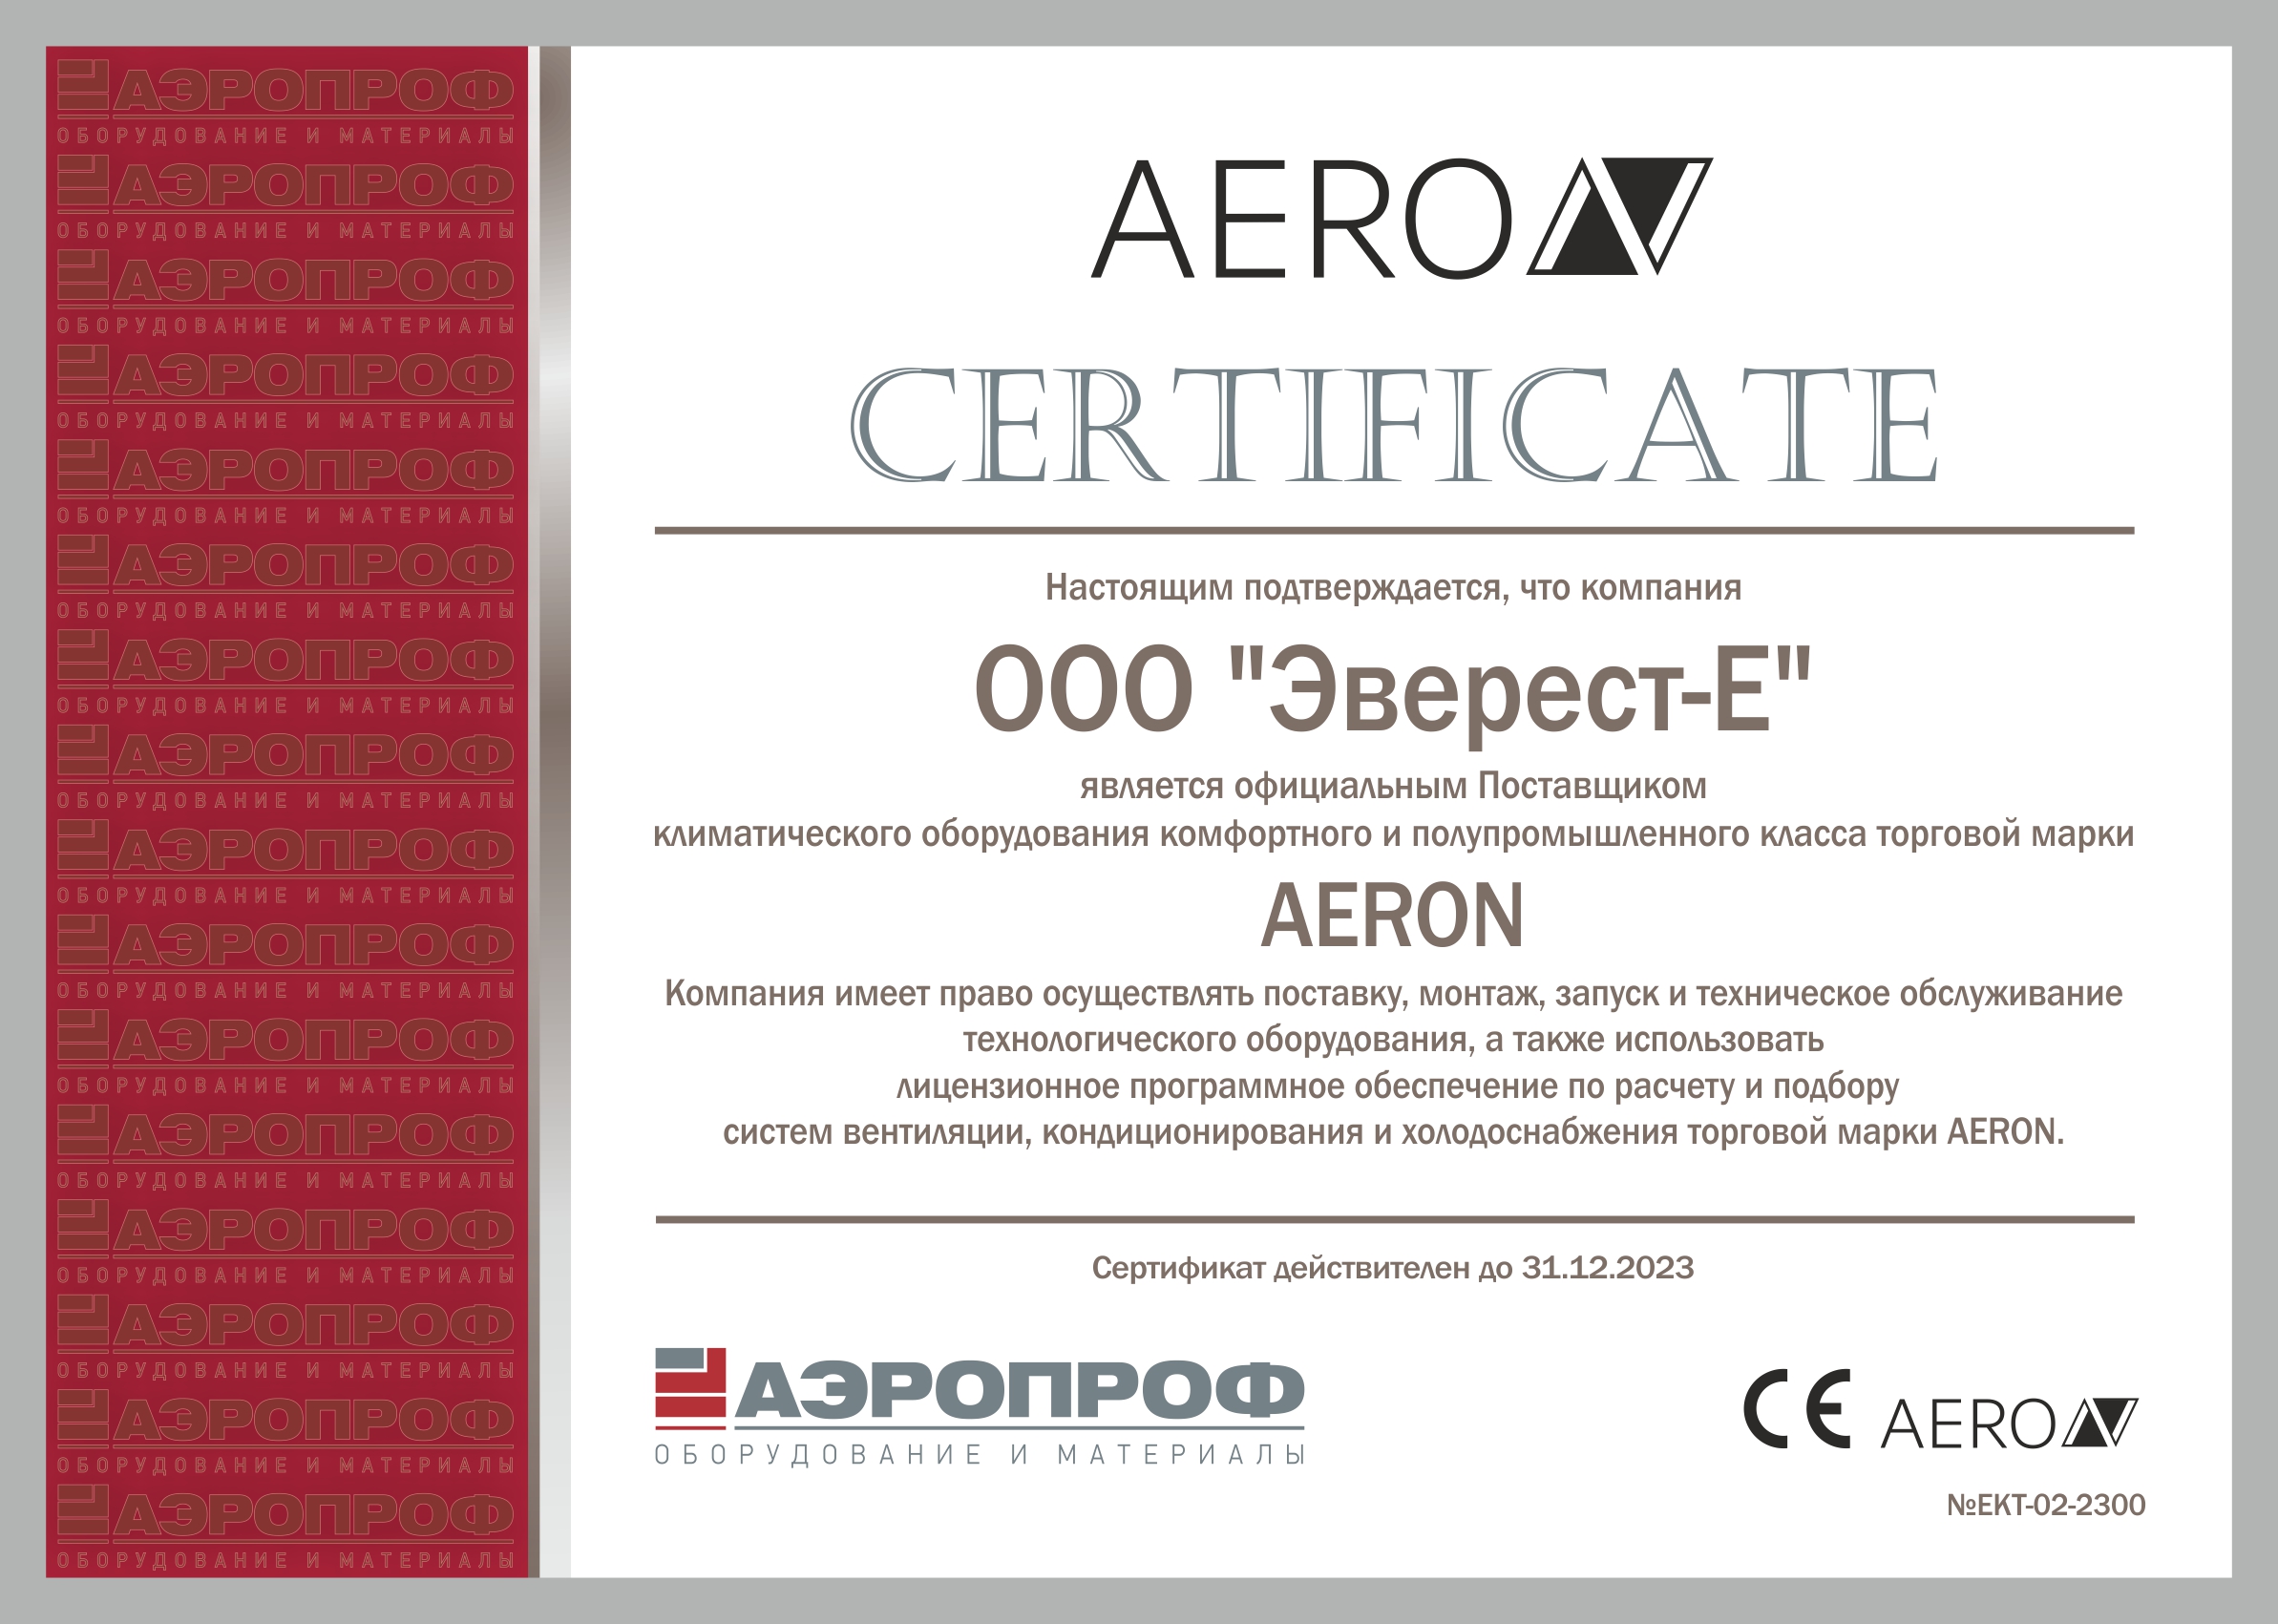 sert23-everest-aeron Kondicioner Aero ALRS-09IH3A-02/ALRS-09OH3A-02 kypit v Ekaterinbyrge v internet-magazine KlimatMarket96.ry Сертификат официального дилера